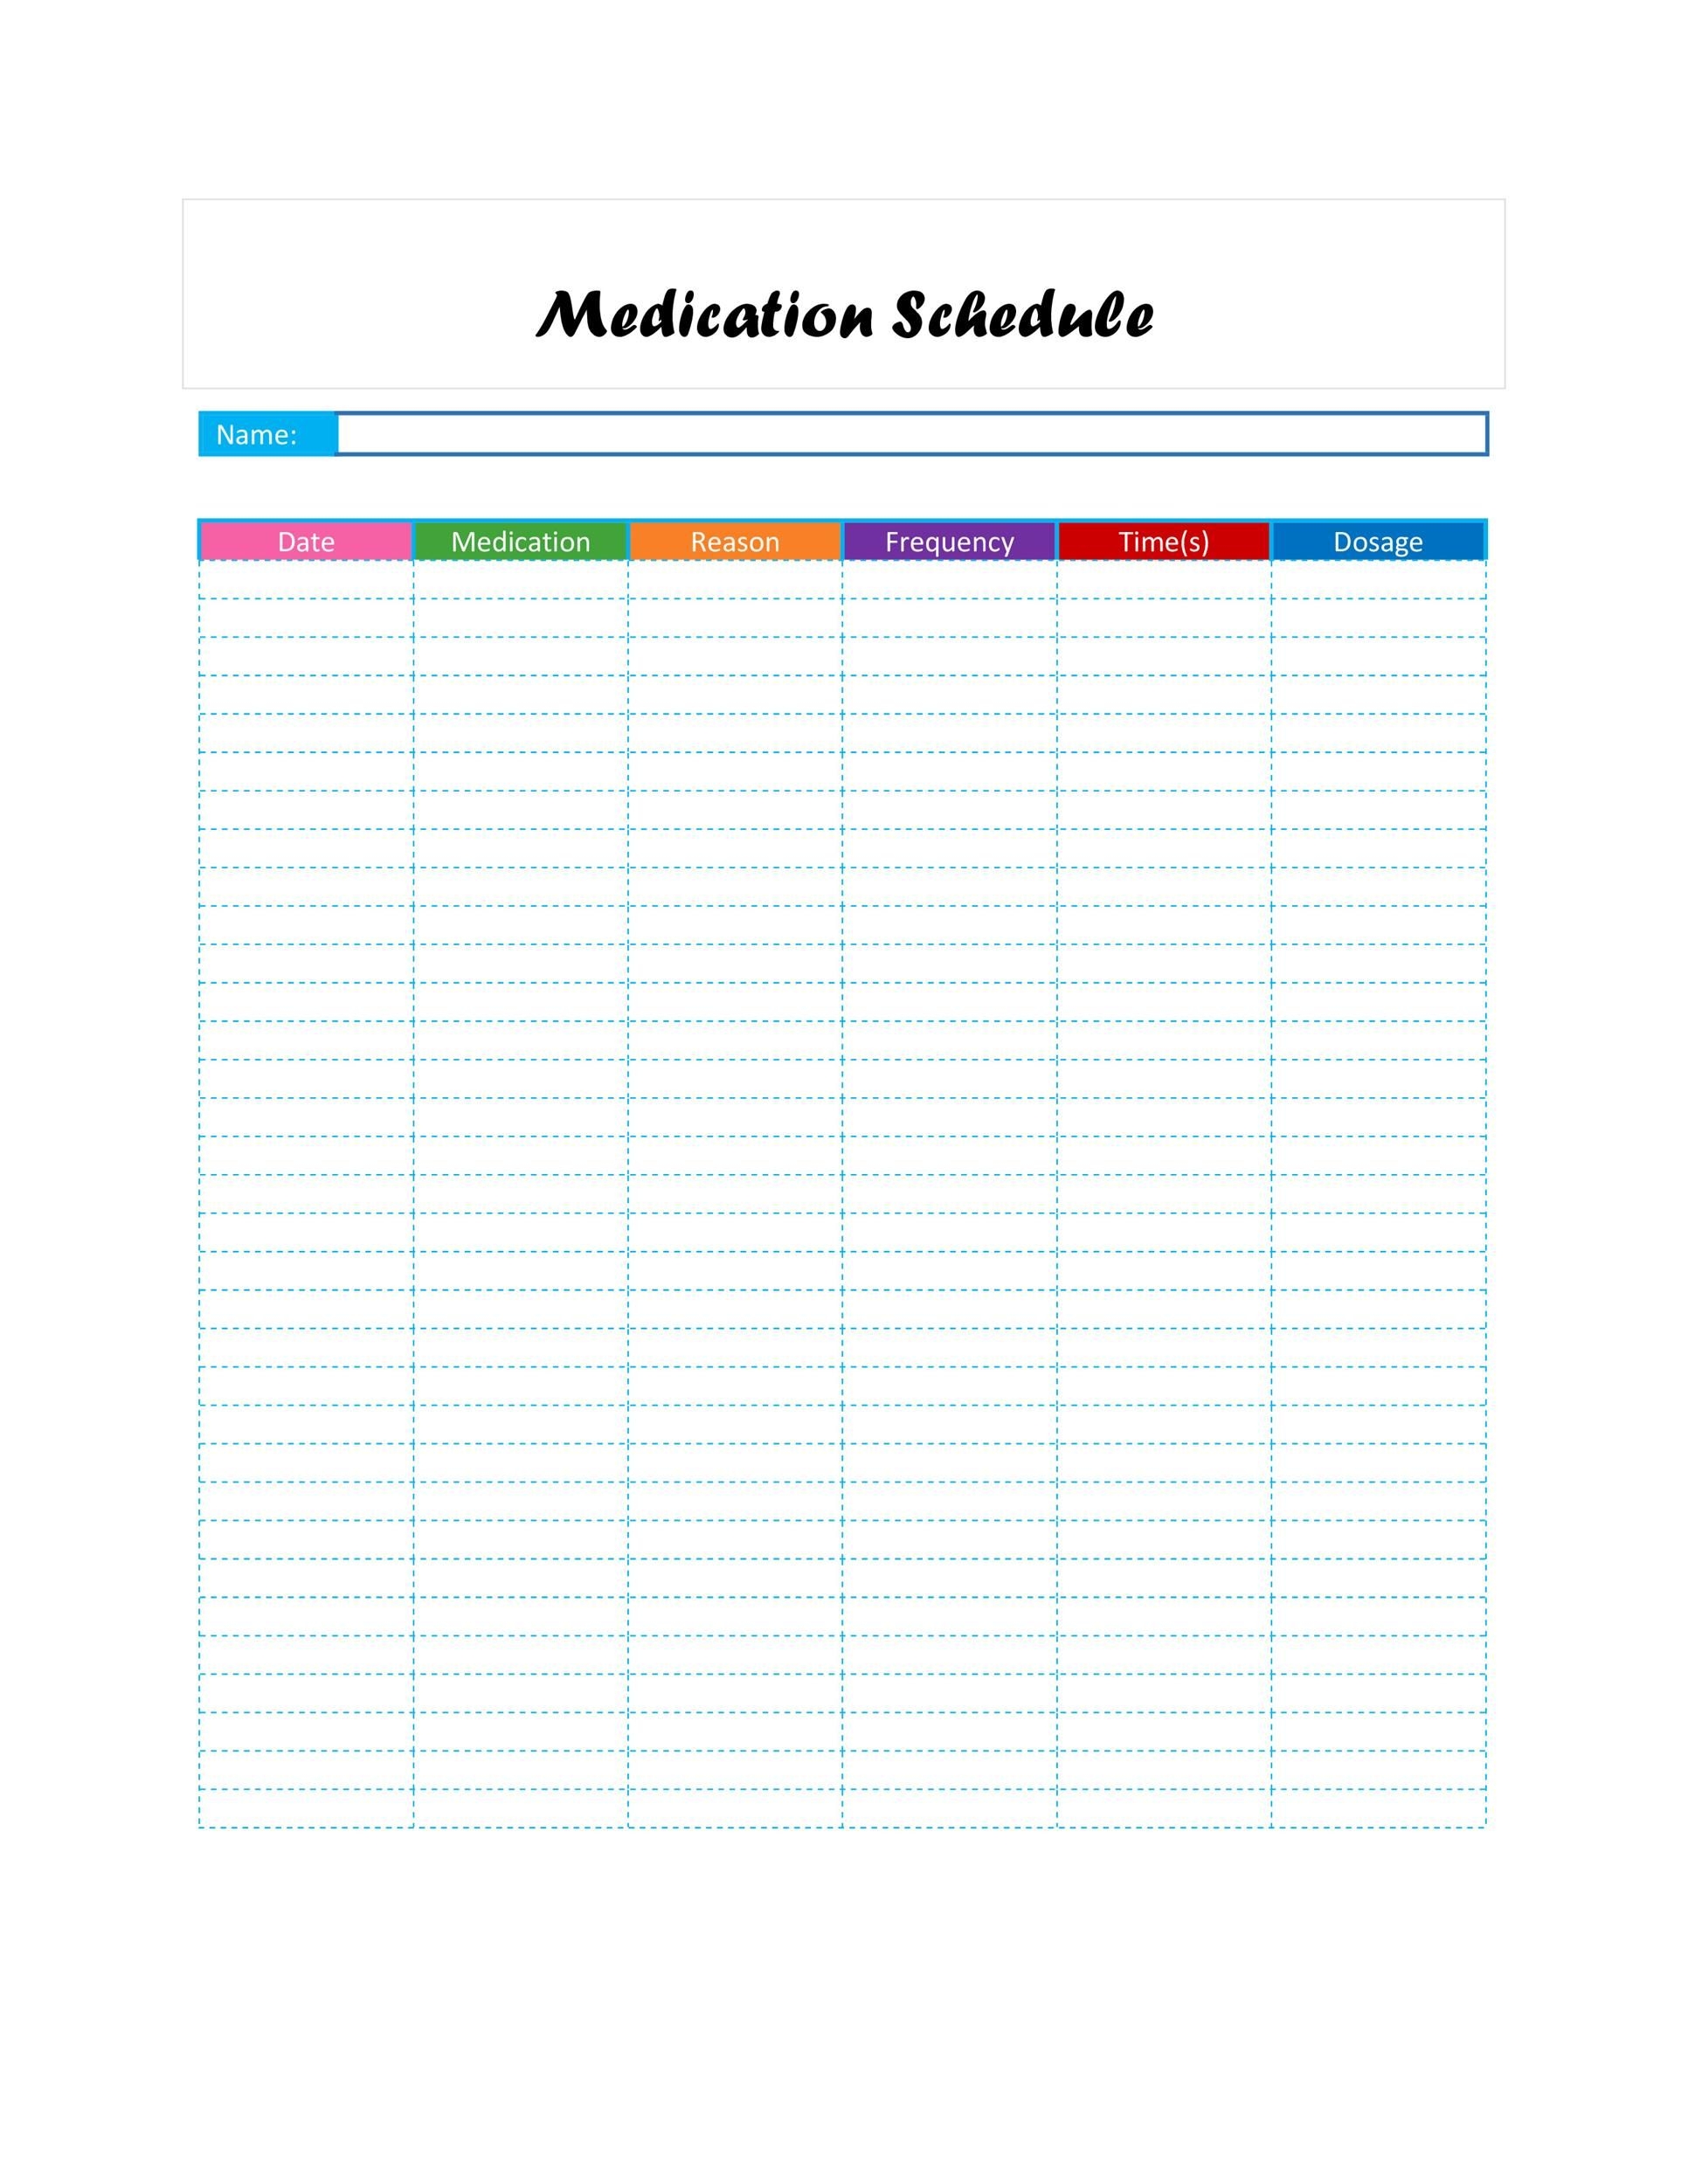 28 day calendar for multi dose medications 55